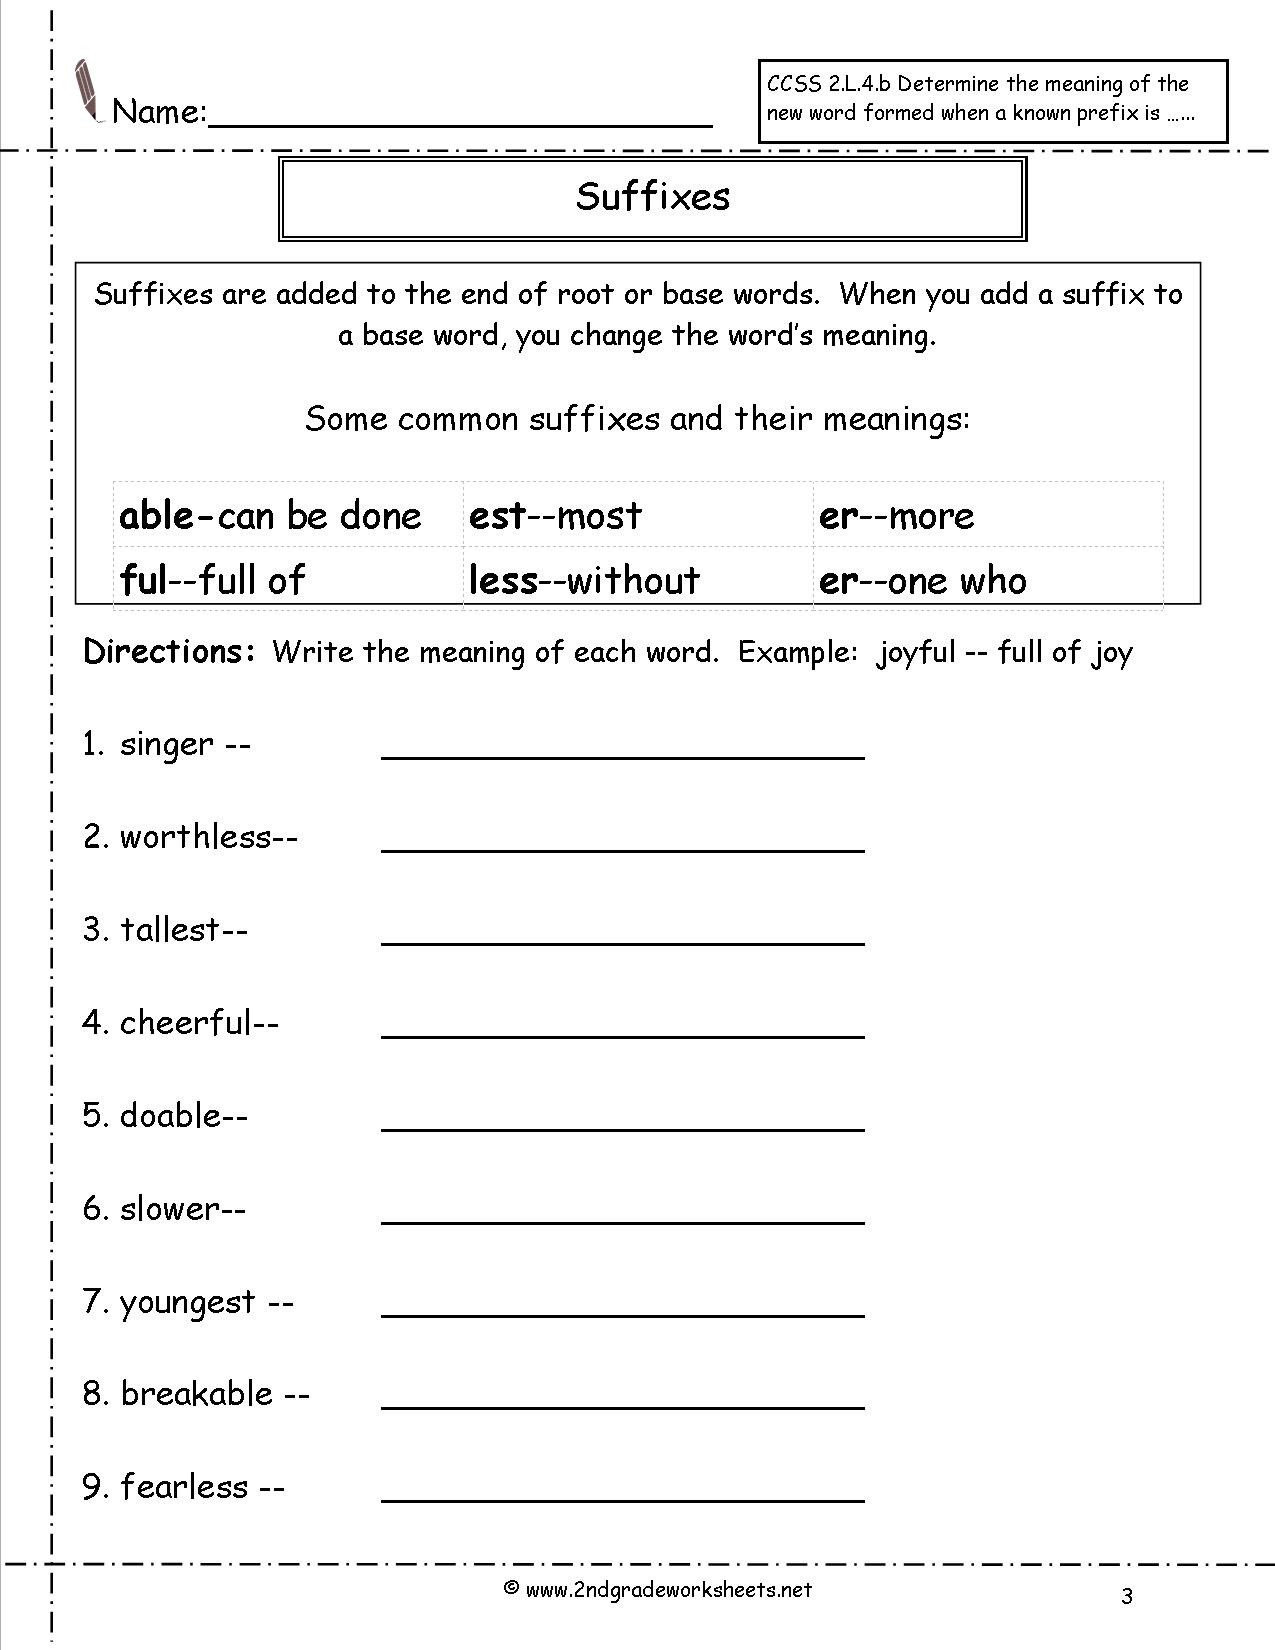 matching-prefixes-worksheet-have-fun-teaching-suffixes-worksheets